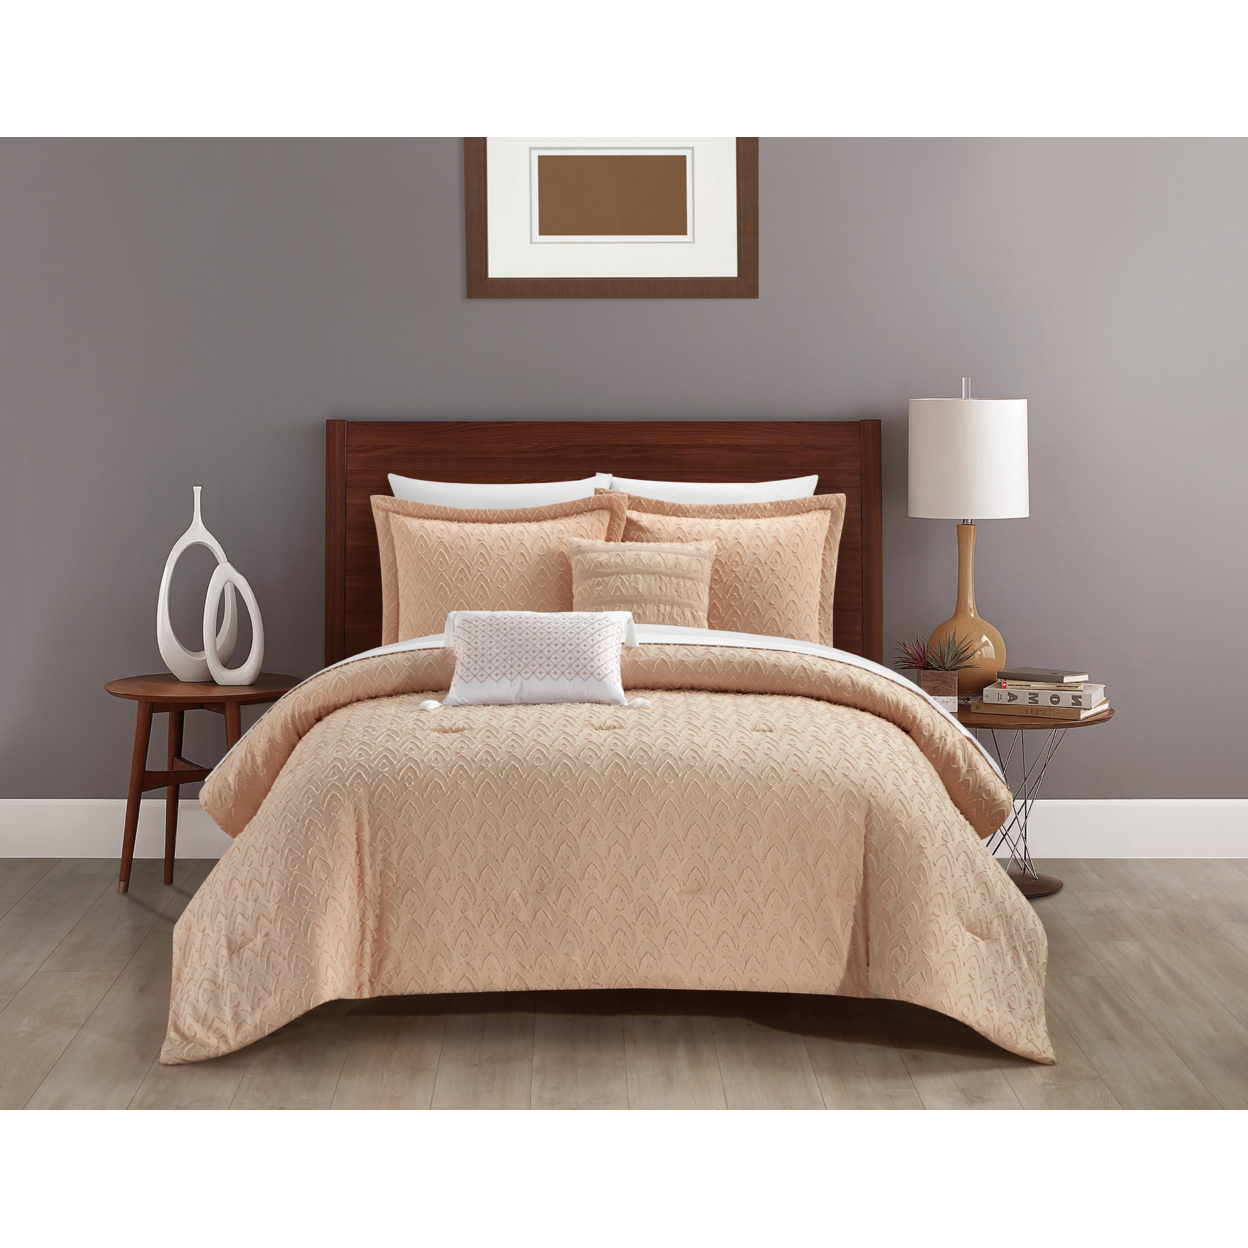 Deign 5 Piece Comforter Set Clip Jacquard Geometric Pattern Design Bedding - Grey, King